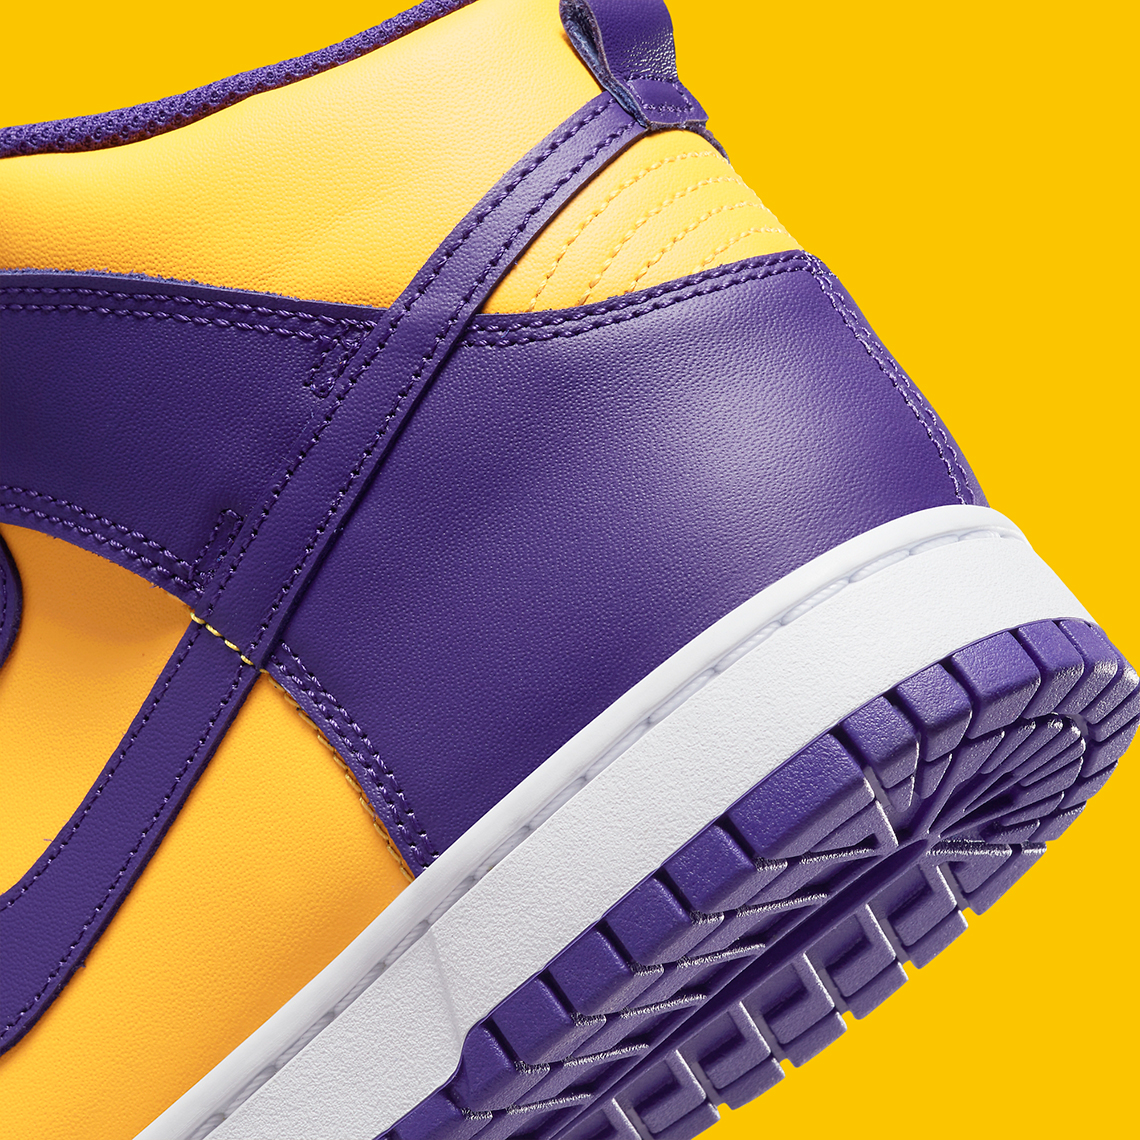 Nike Dunk High Purple Yellow DD1399-500 | SneakerNews.com